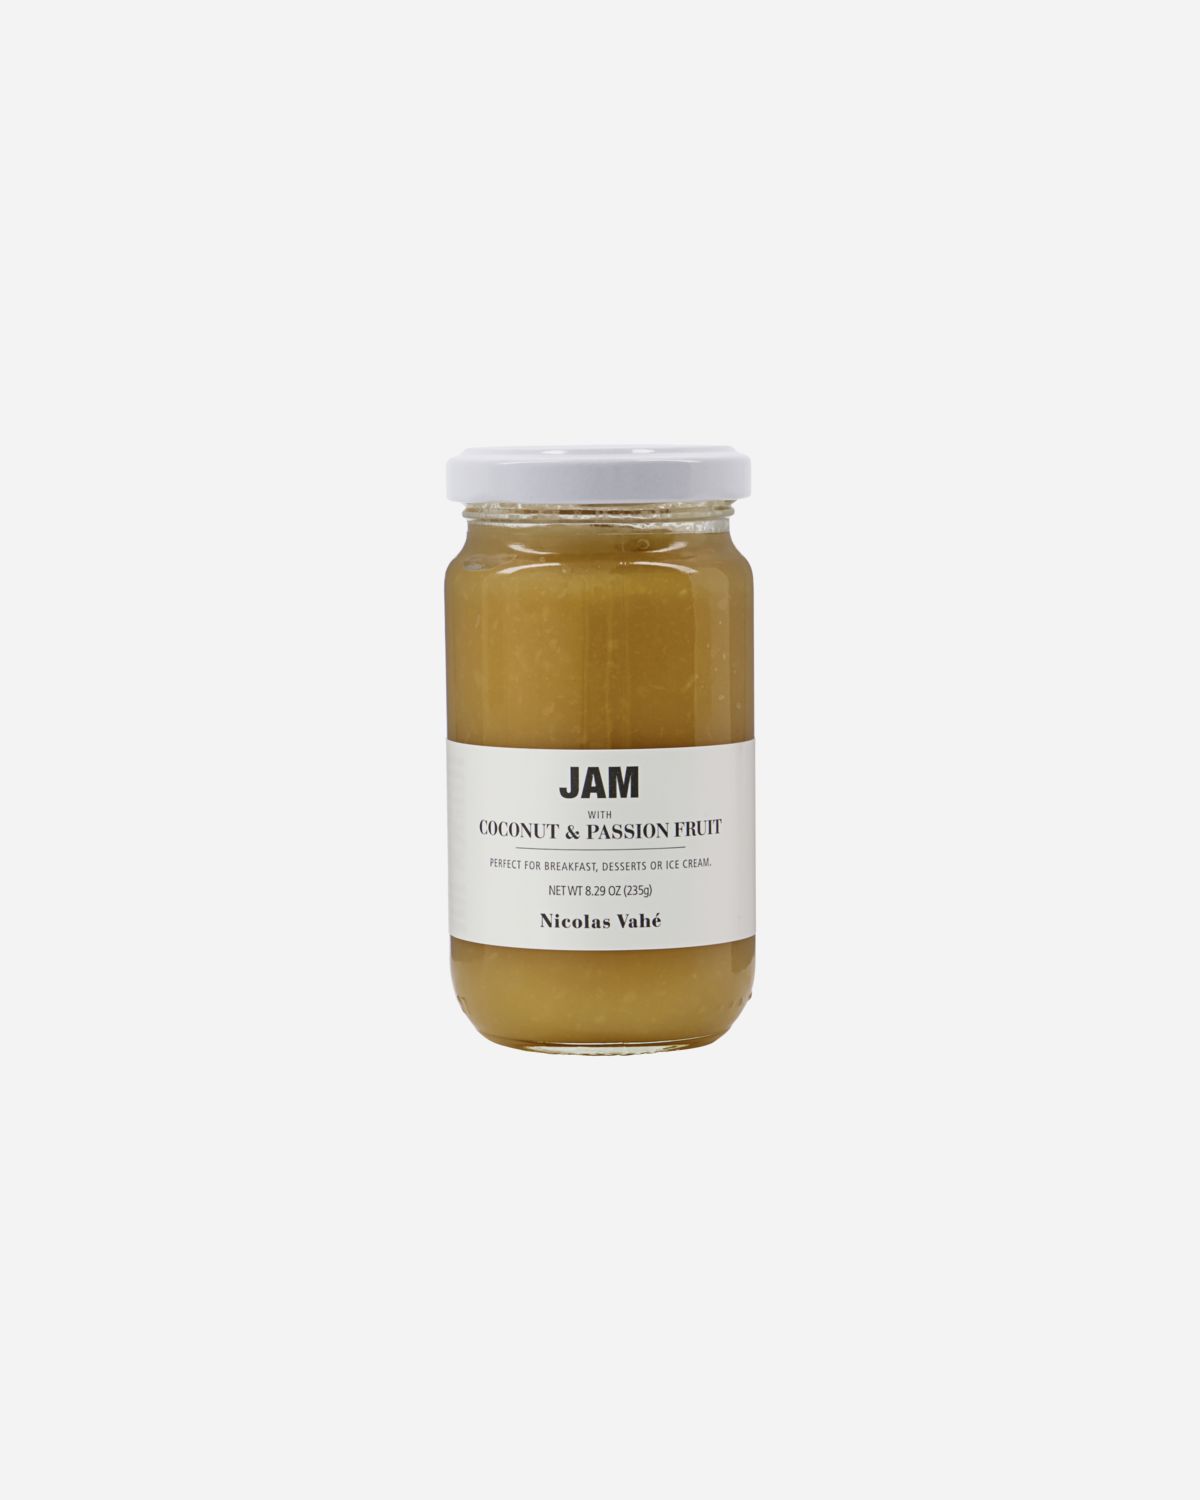 Jam, Coconut & Passion, 235 g.